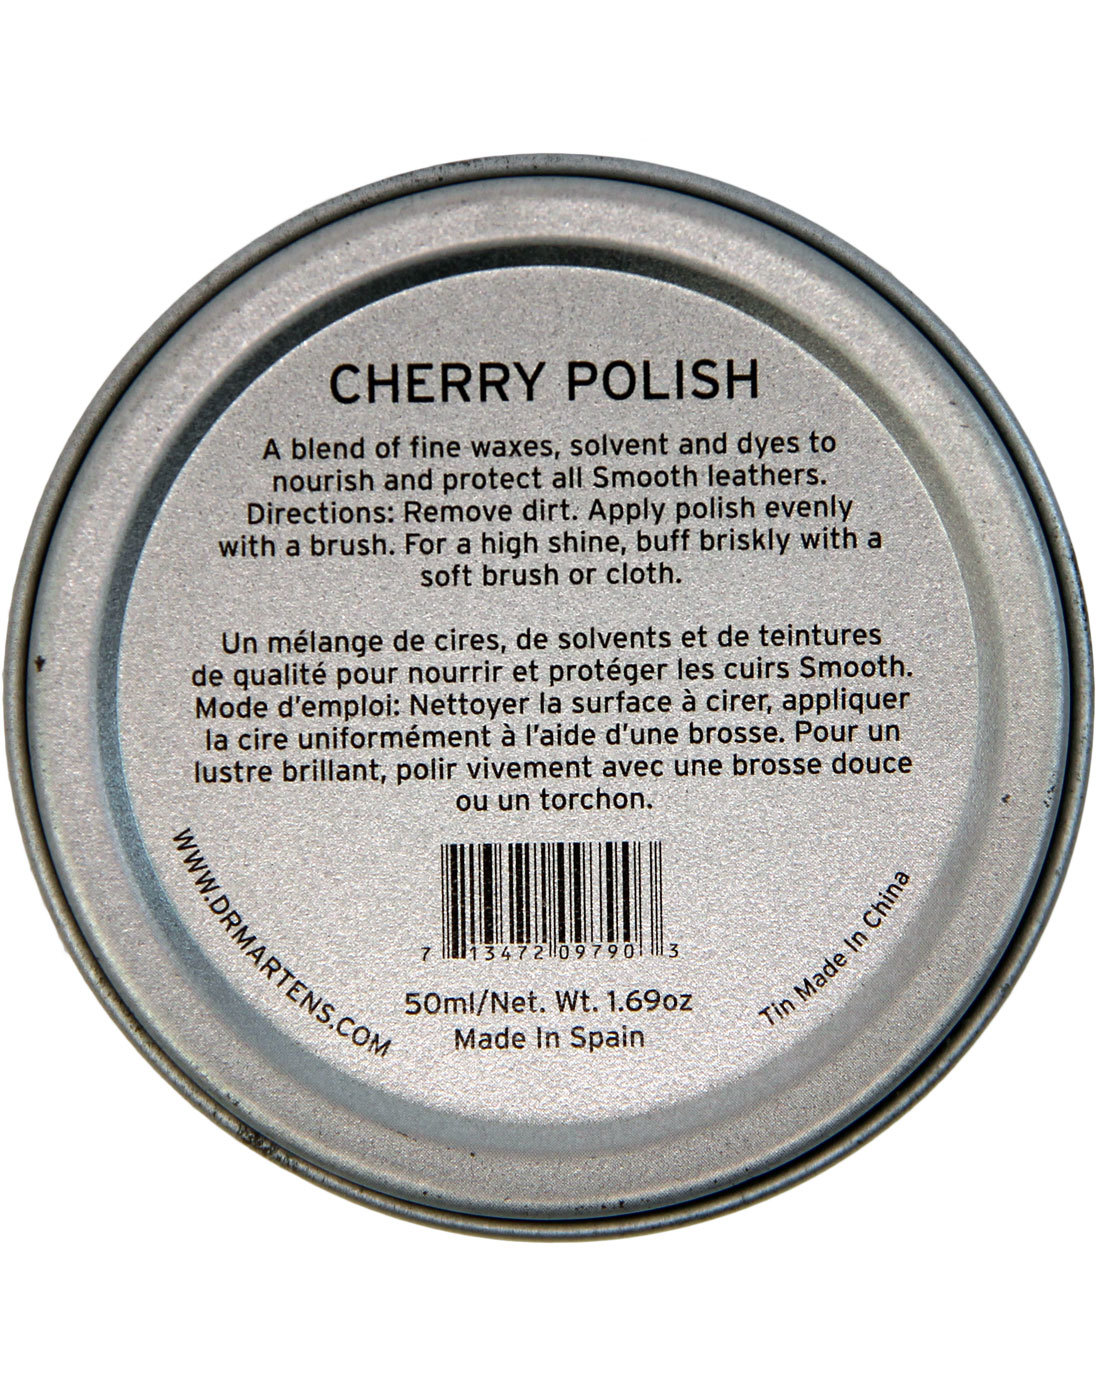 cherry polish dr martens